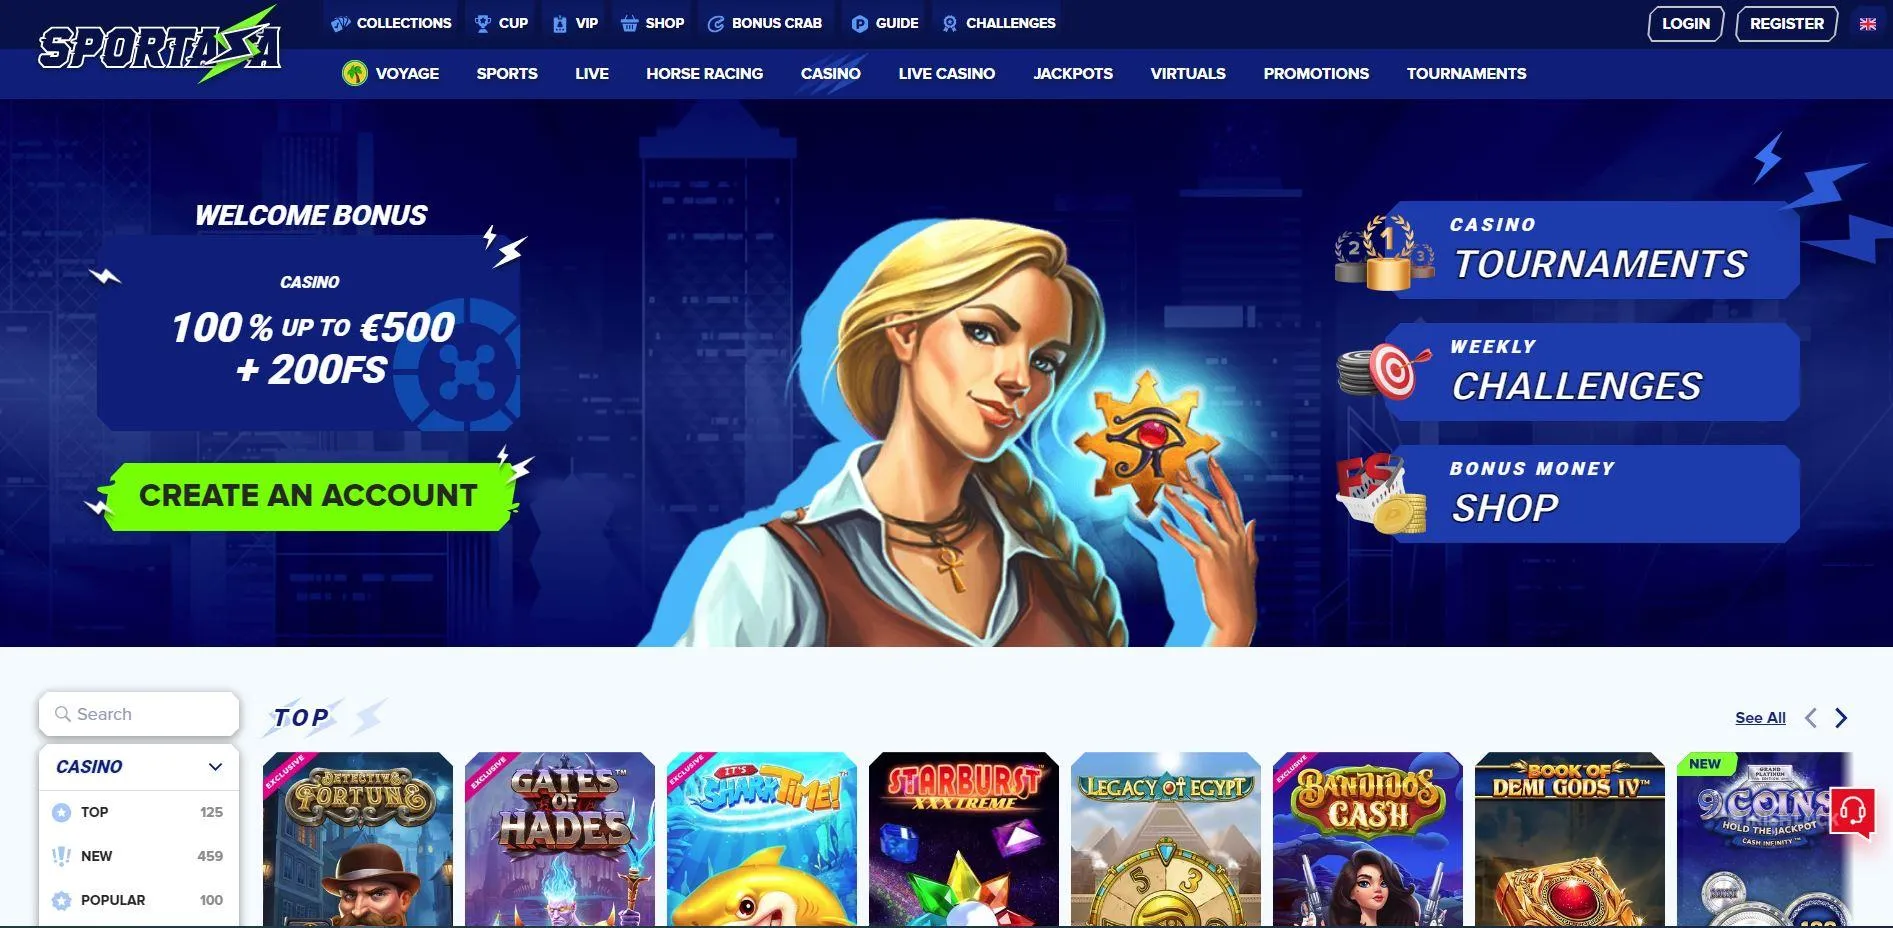 sportaza casino homepage welcome bonus rabidi n.v. casinos